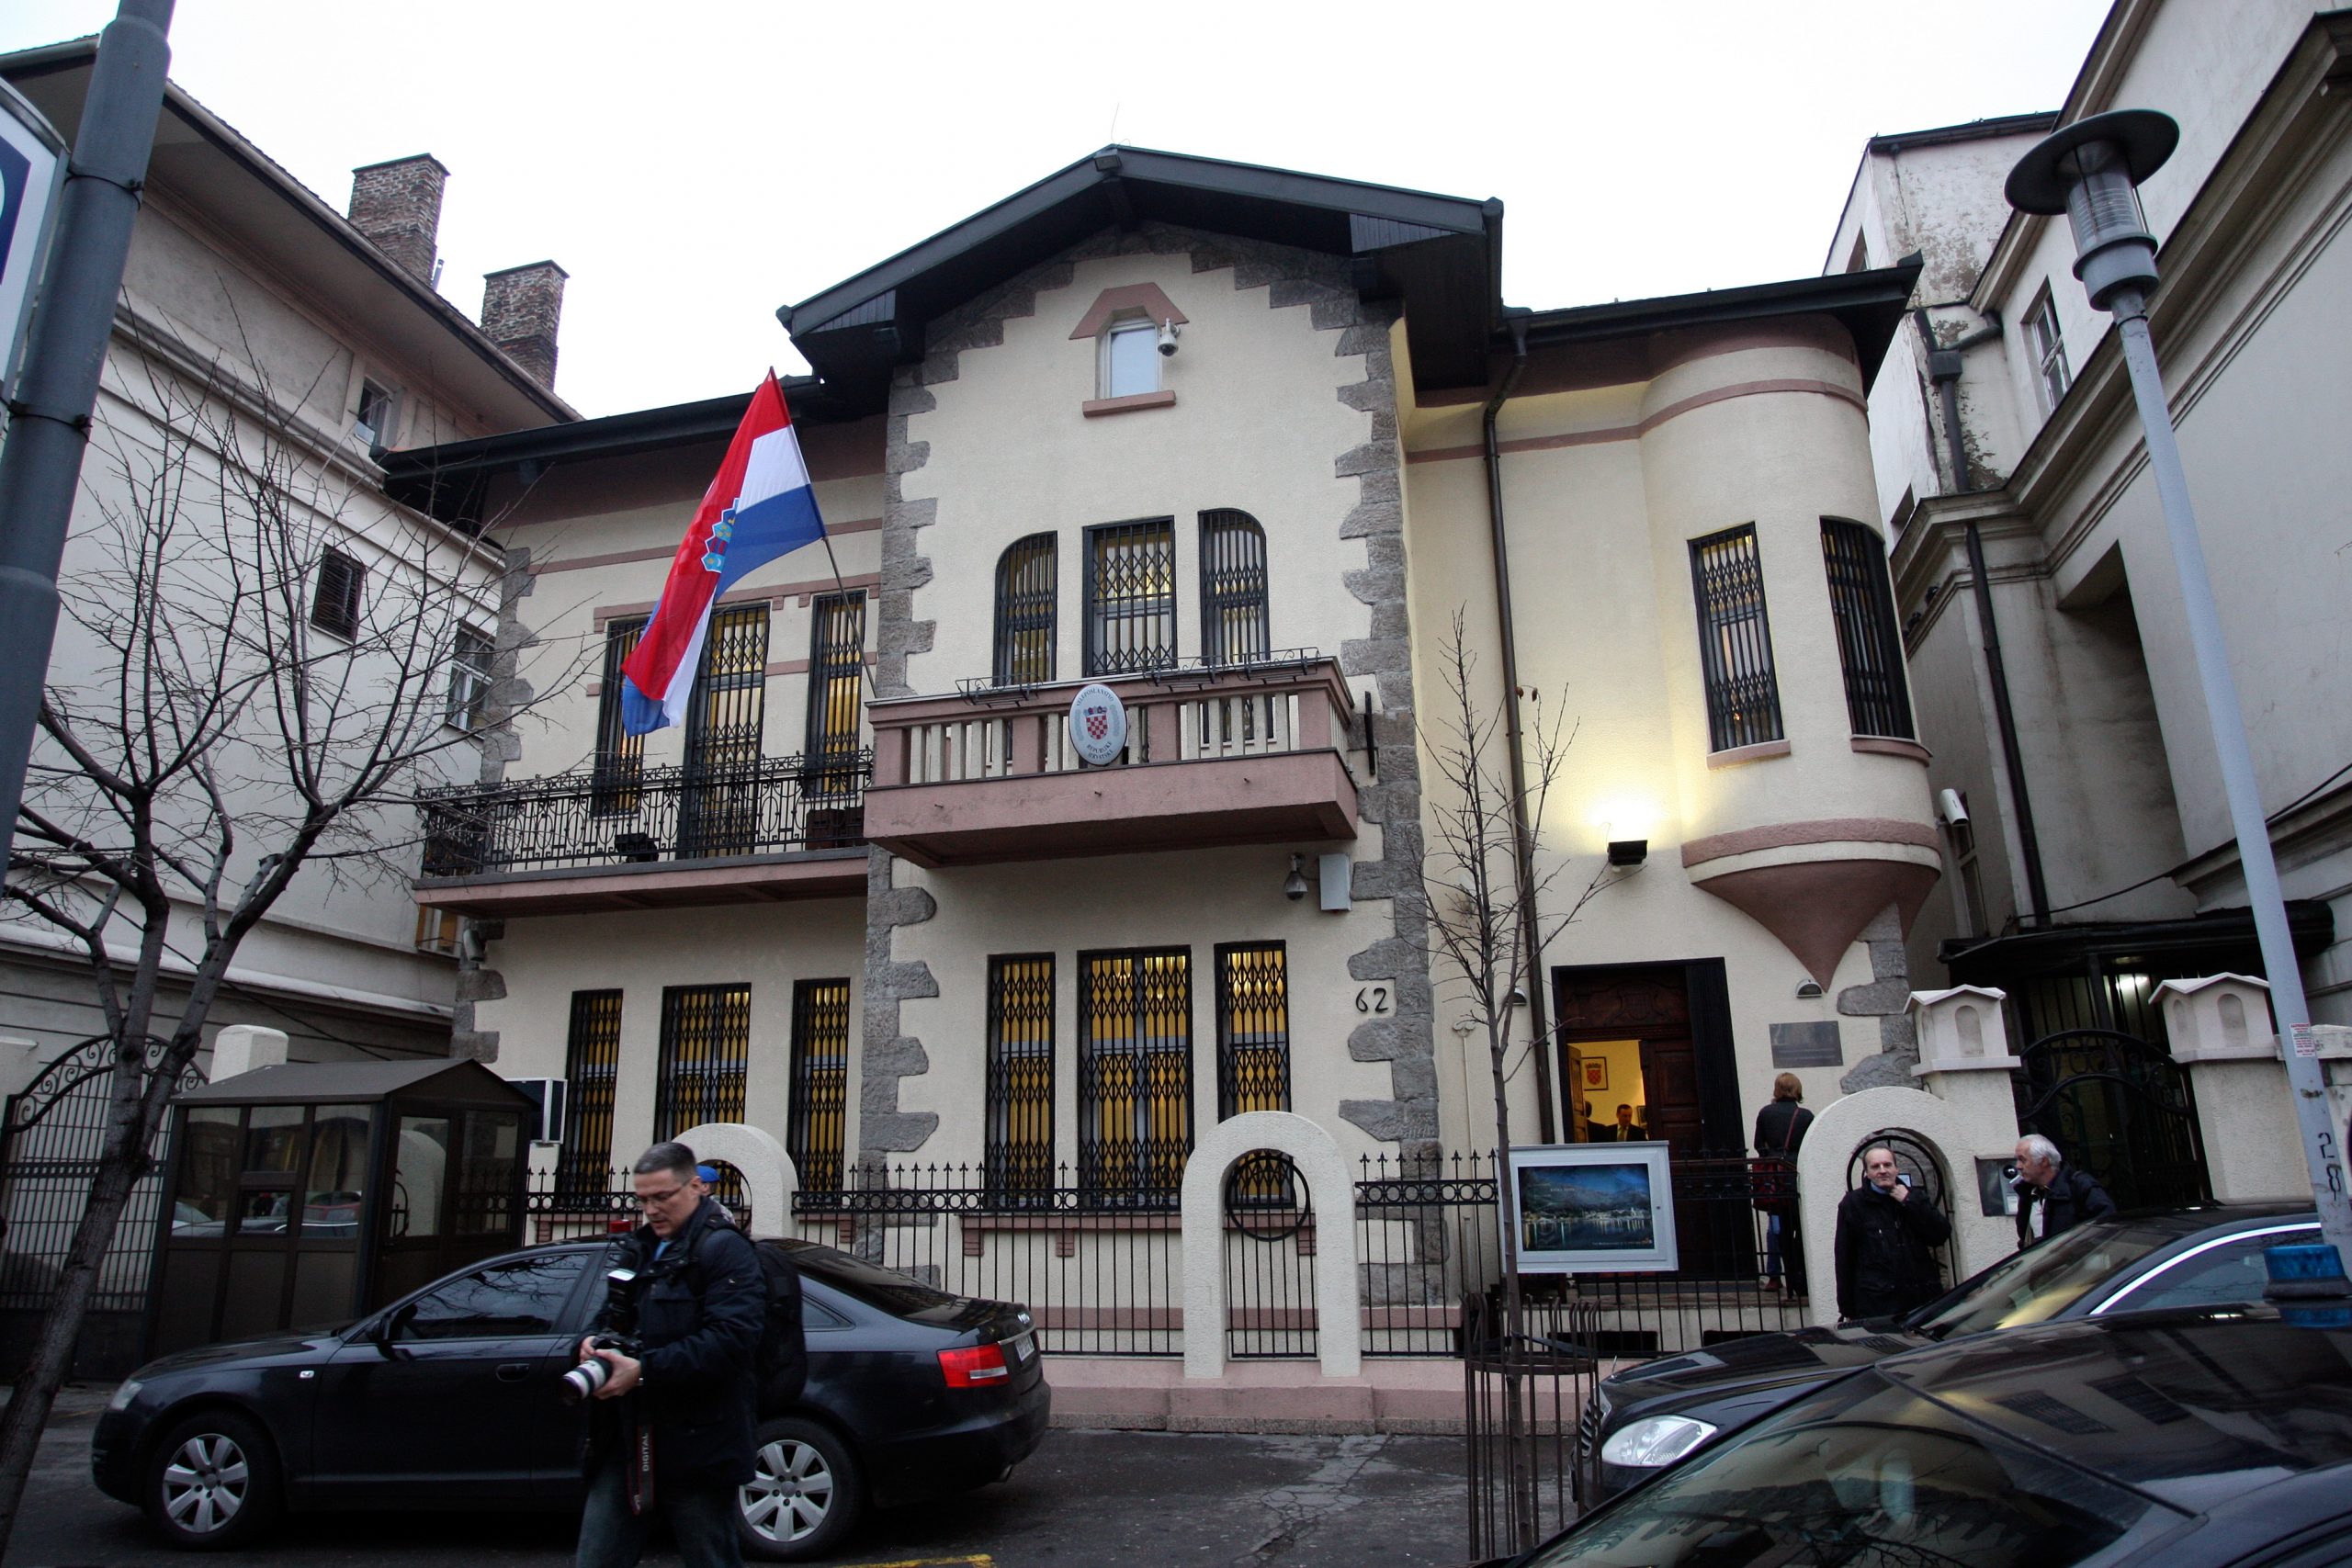 Beograd, 16.01.2013 - Zgrada veleposlanstva Republike Hrvatske u Beogradu.
foto FaH/ Damir SENÈAR /ds